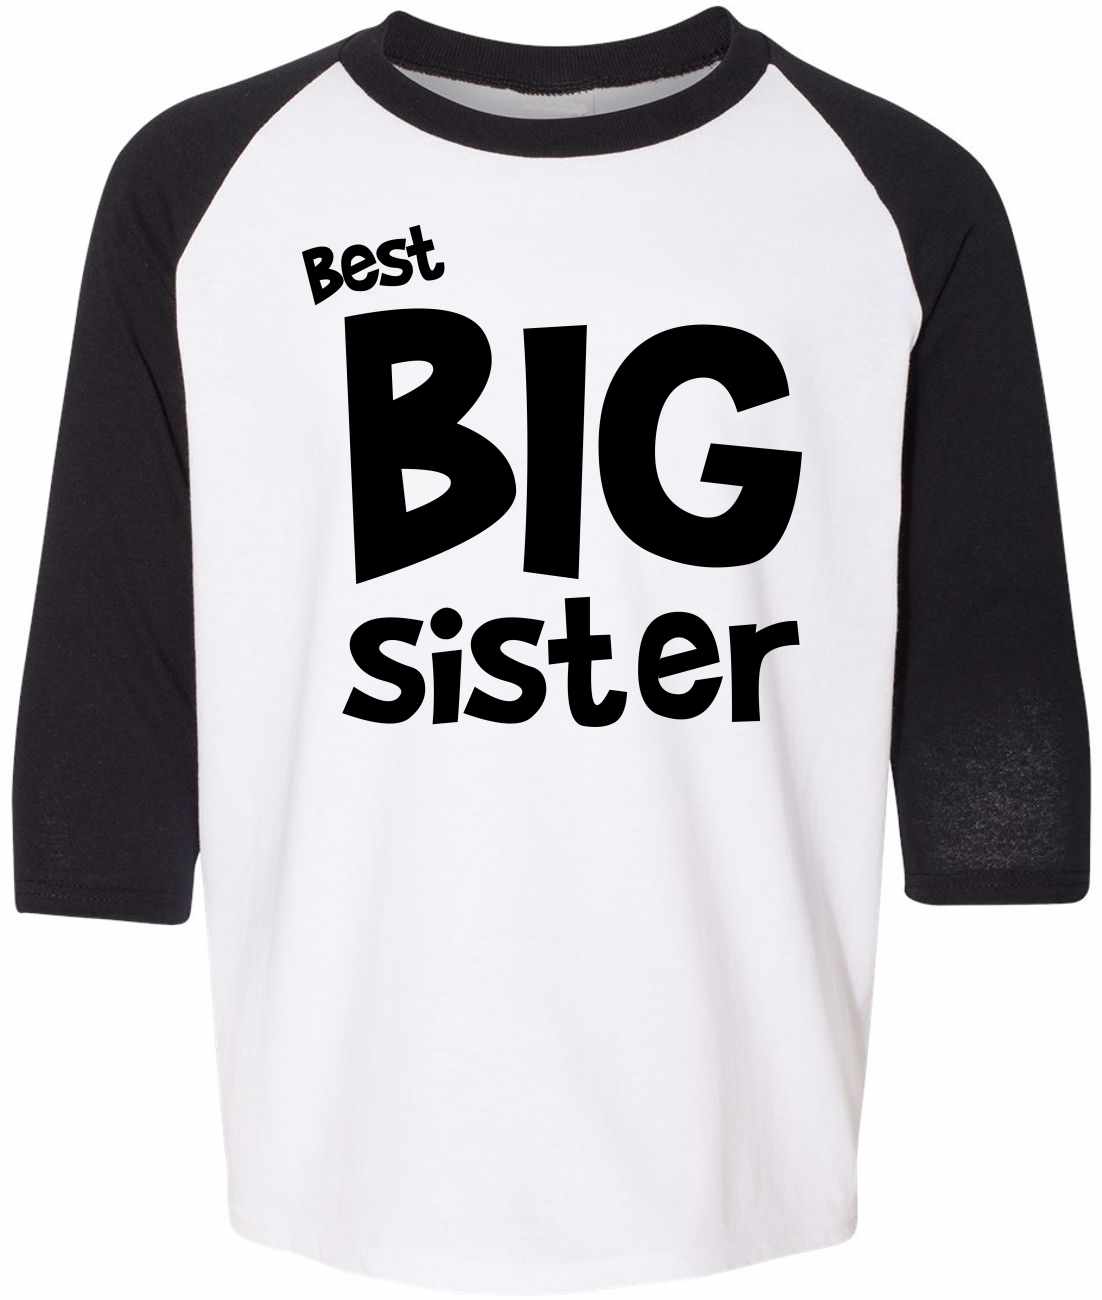 Best Big Sister on Youth Baseball Shirt (#1139-212)